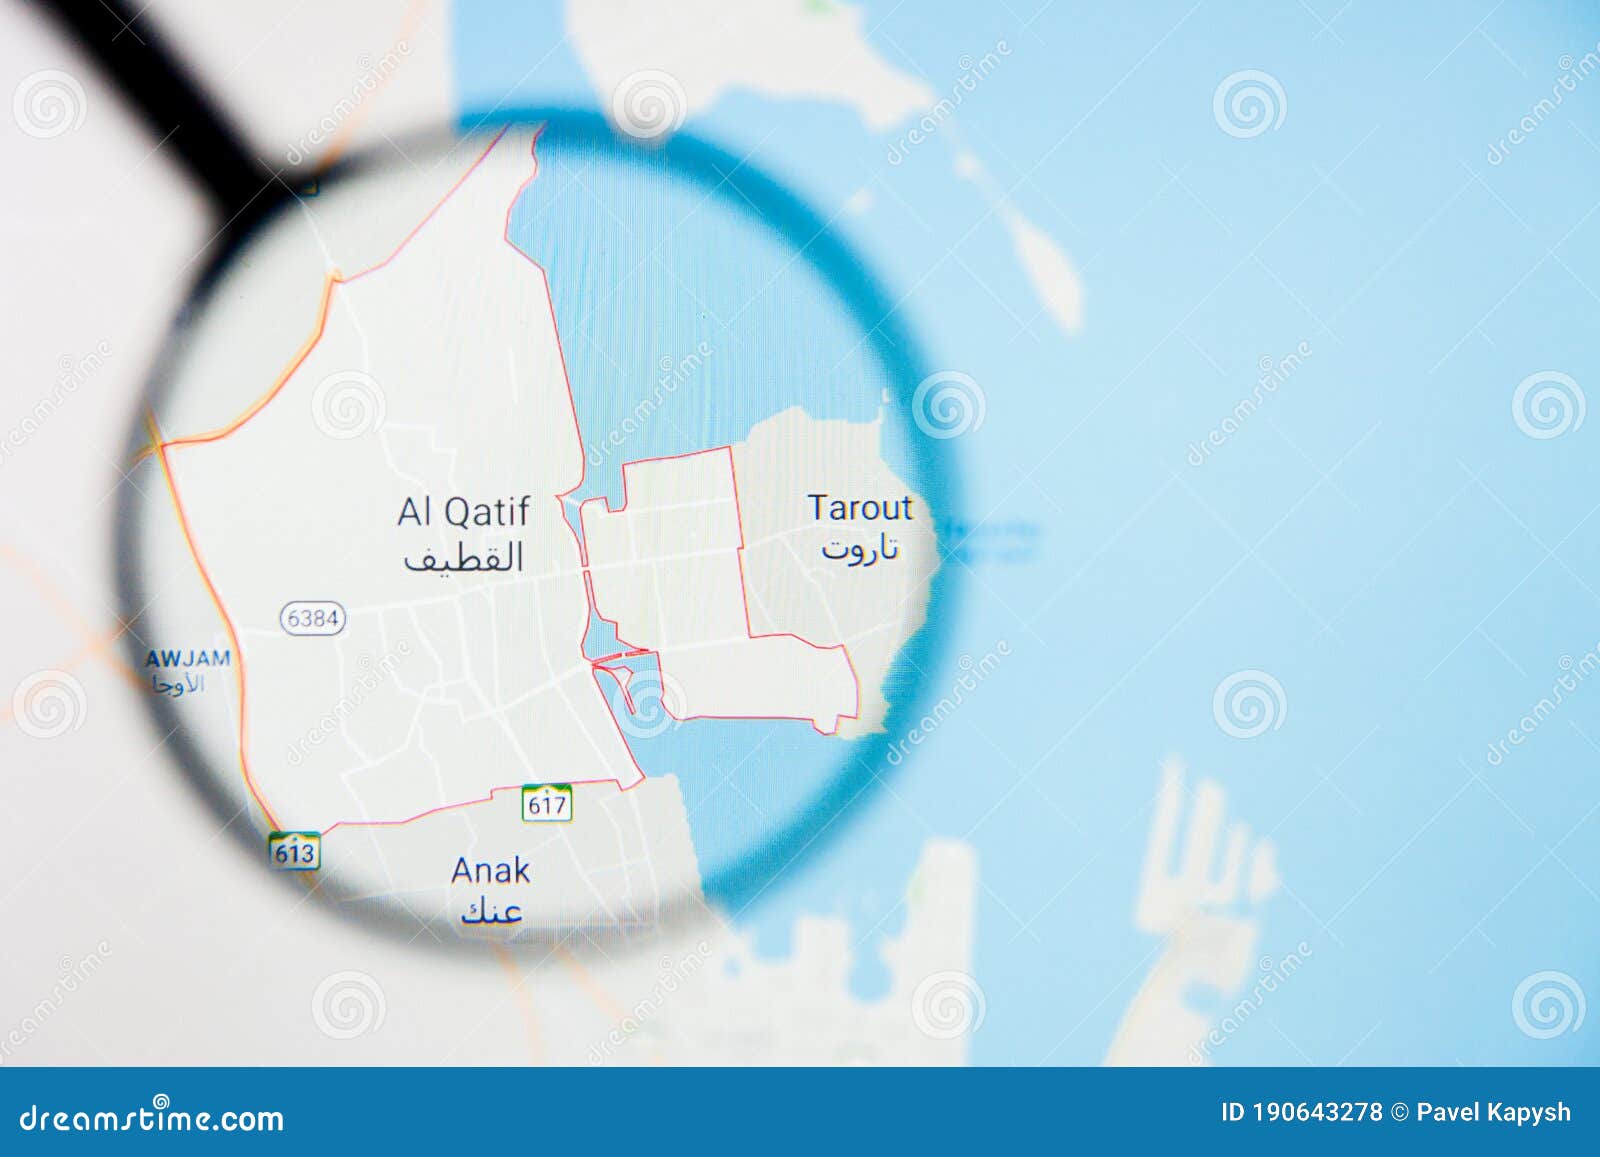 al qatif city in saudi arabia visualization illustrative concept on display screen through magnifying glass